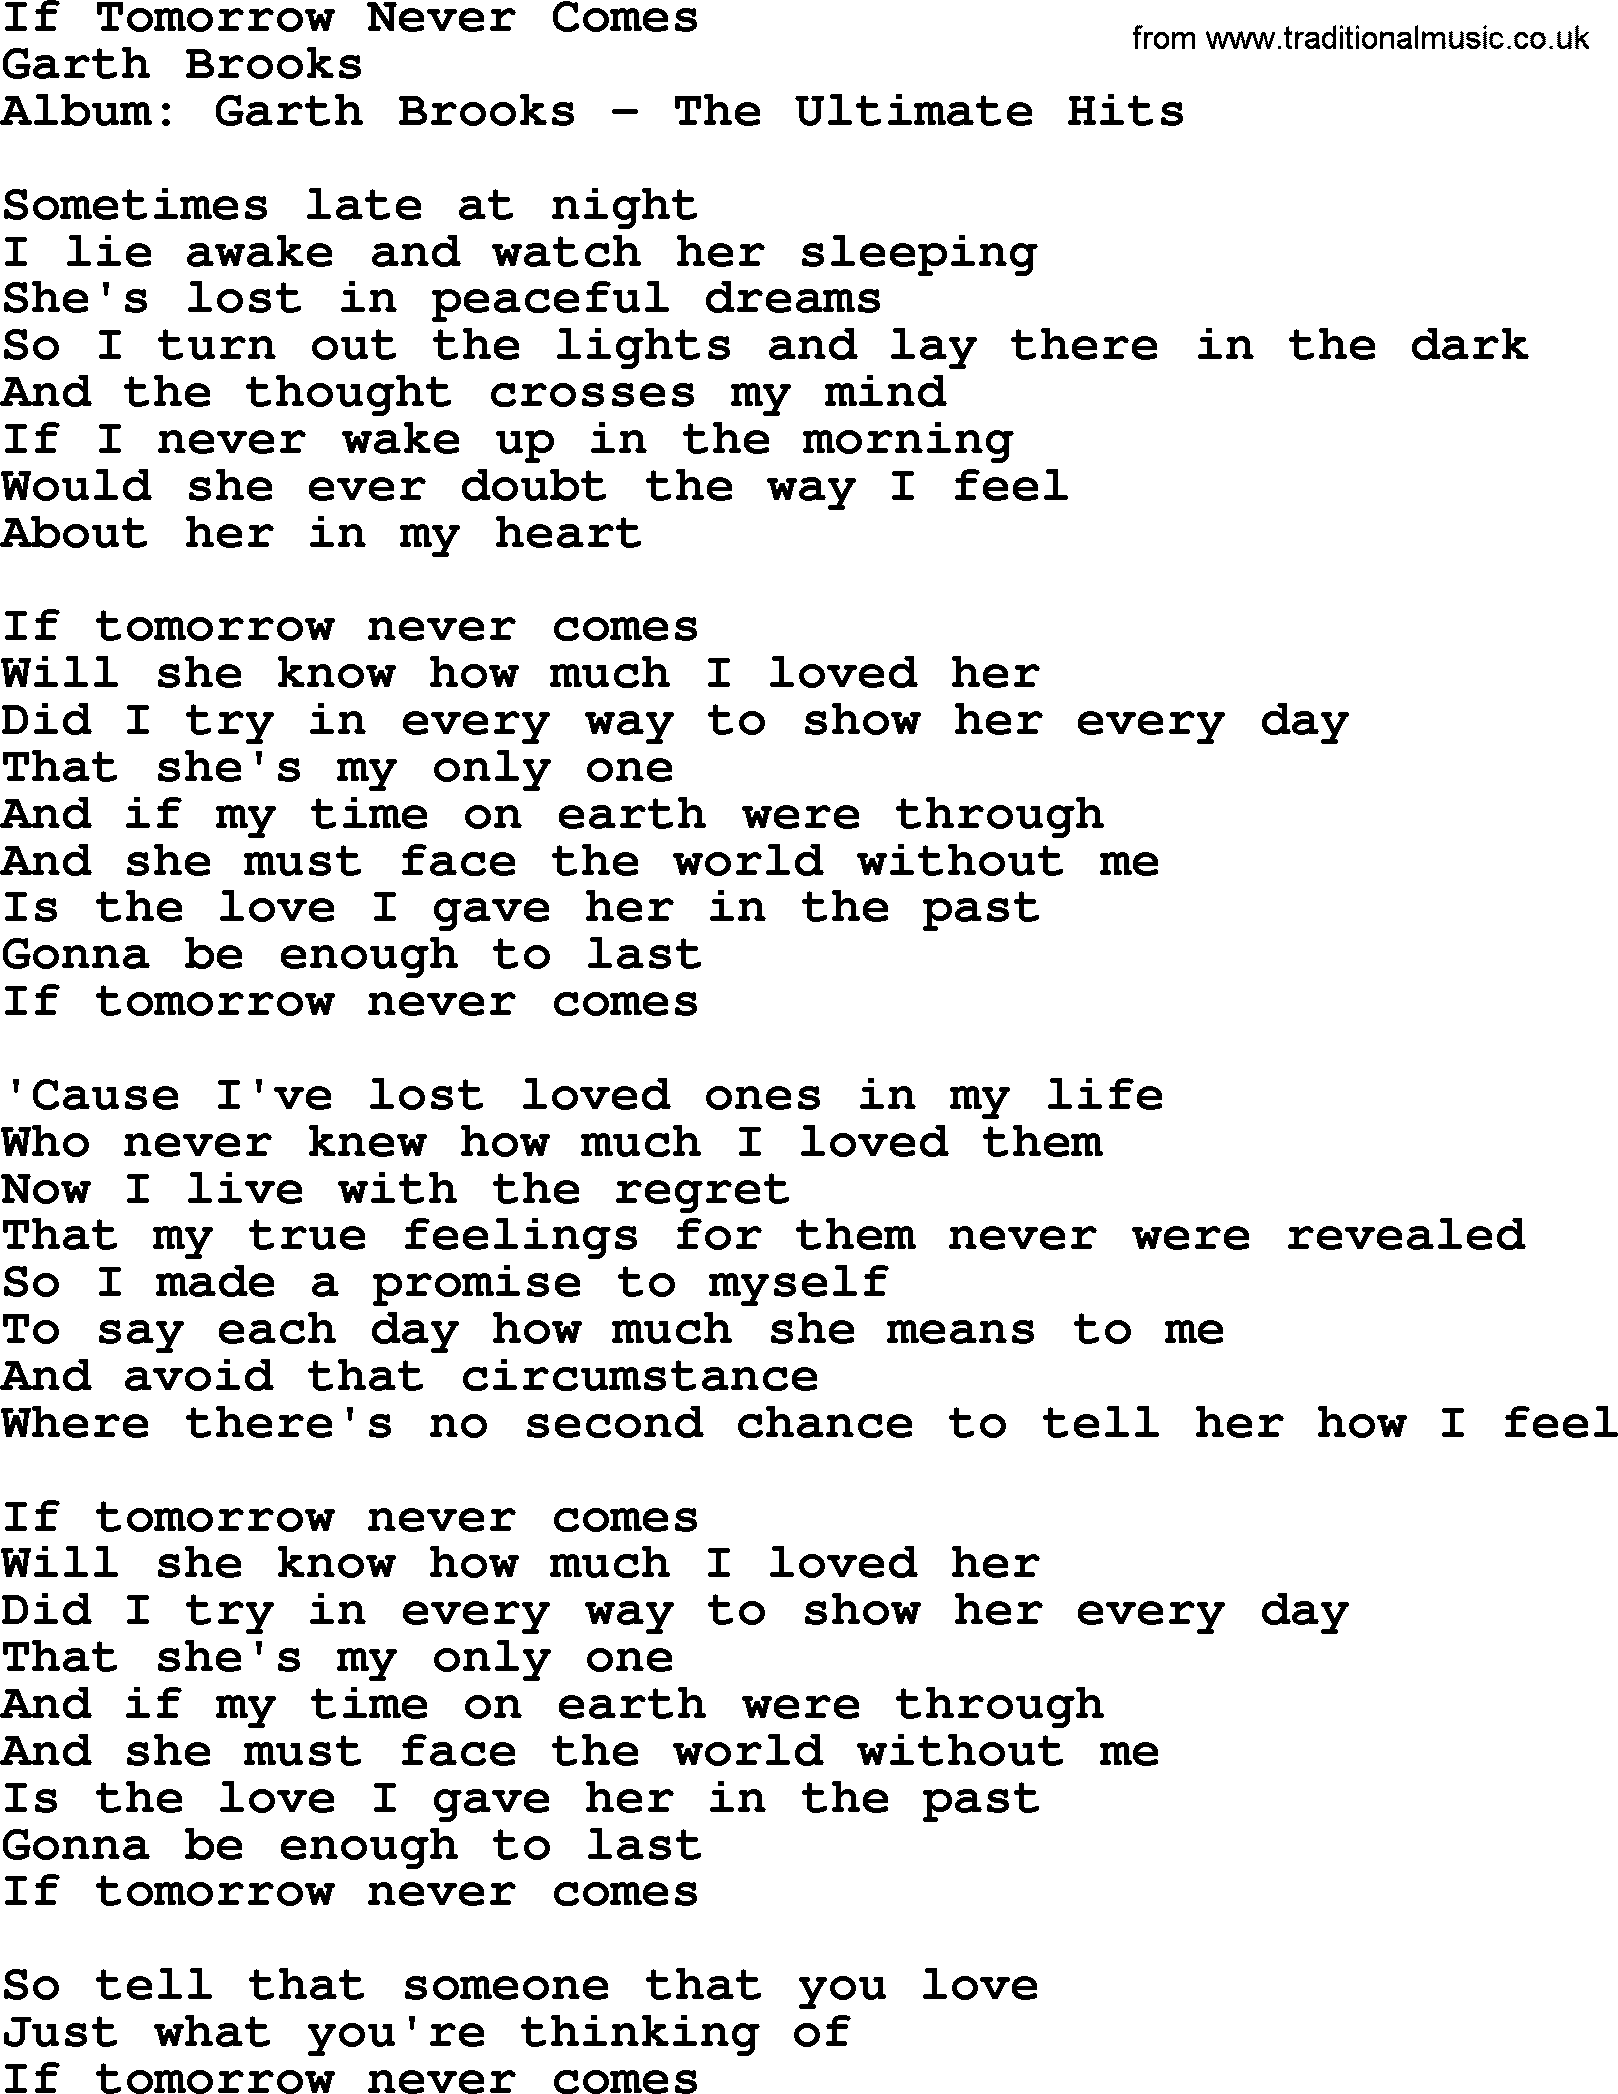 Garth Brooks song: If Tomorrow Never Comes, lyrics